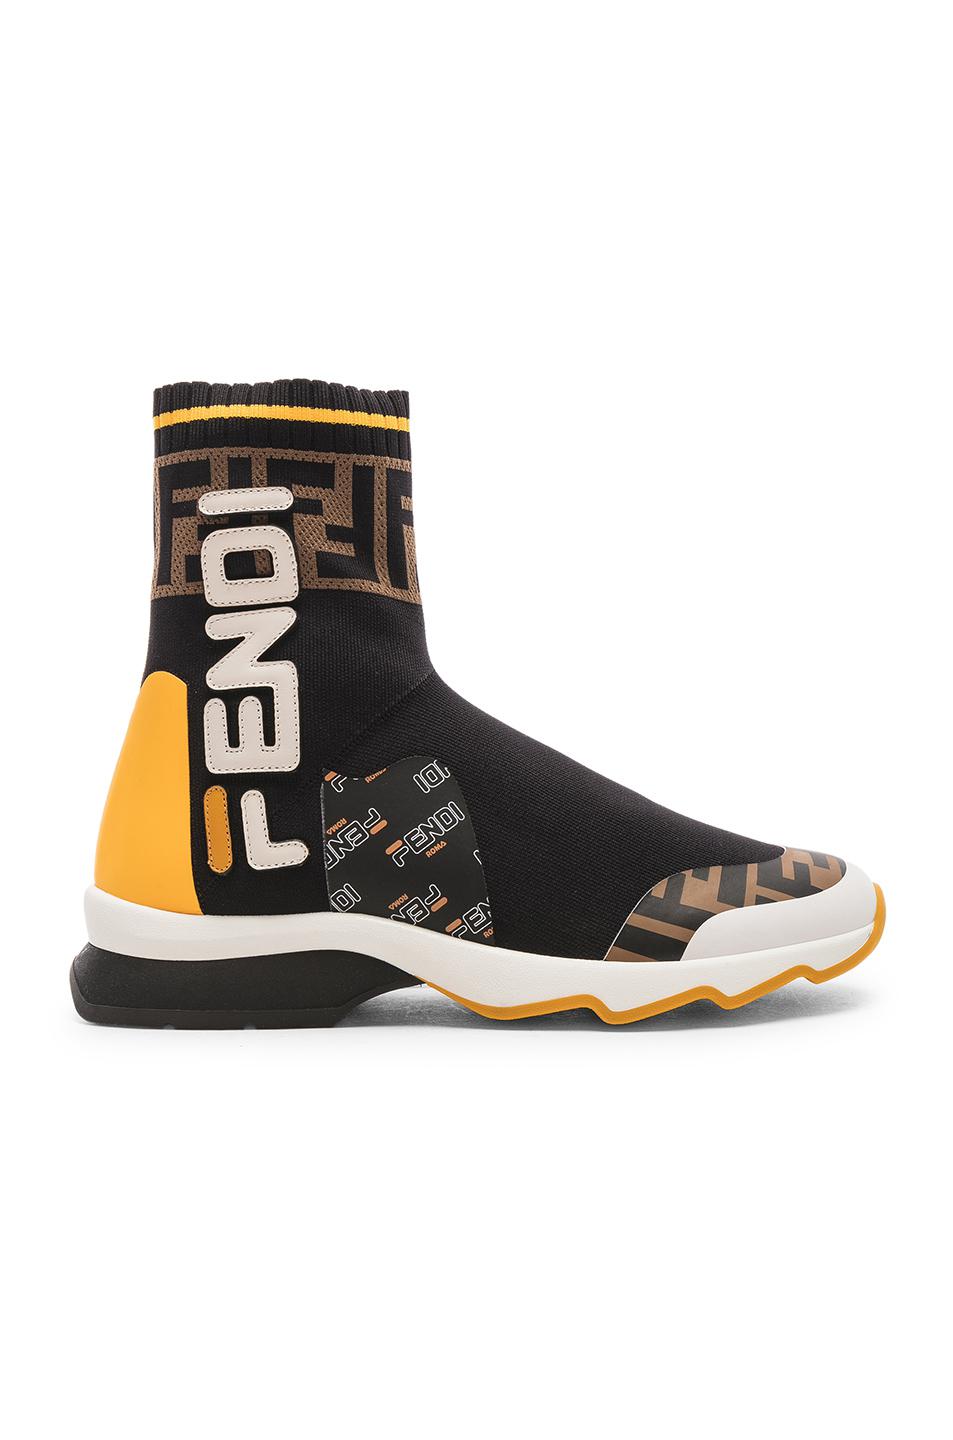 Fendi Sneaker Socks Hot Sale, SAVE 46% - outdoorito.com